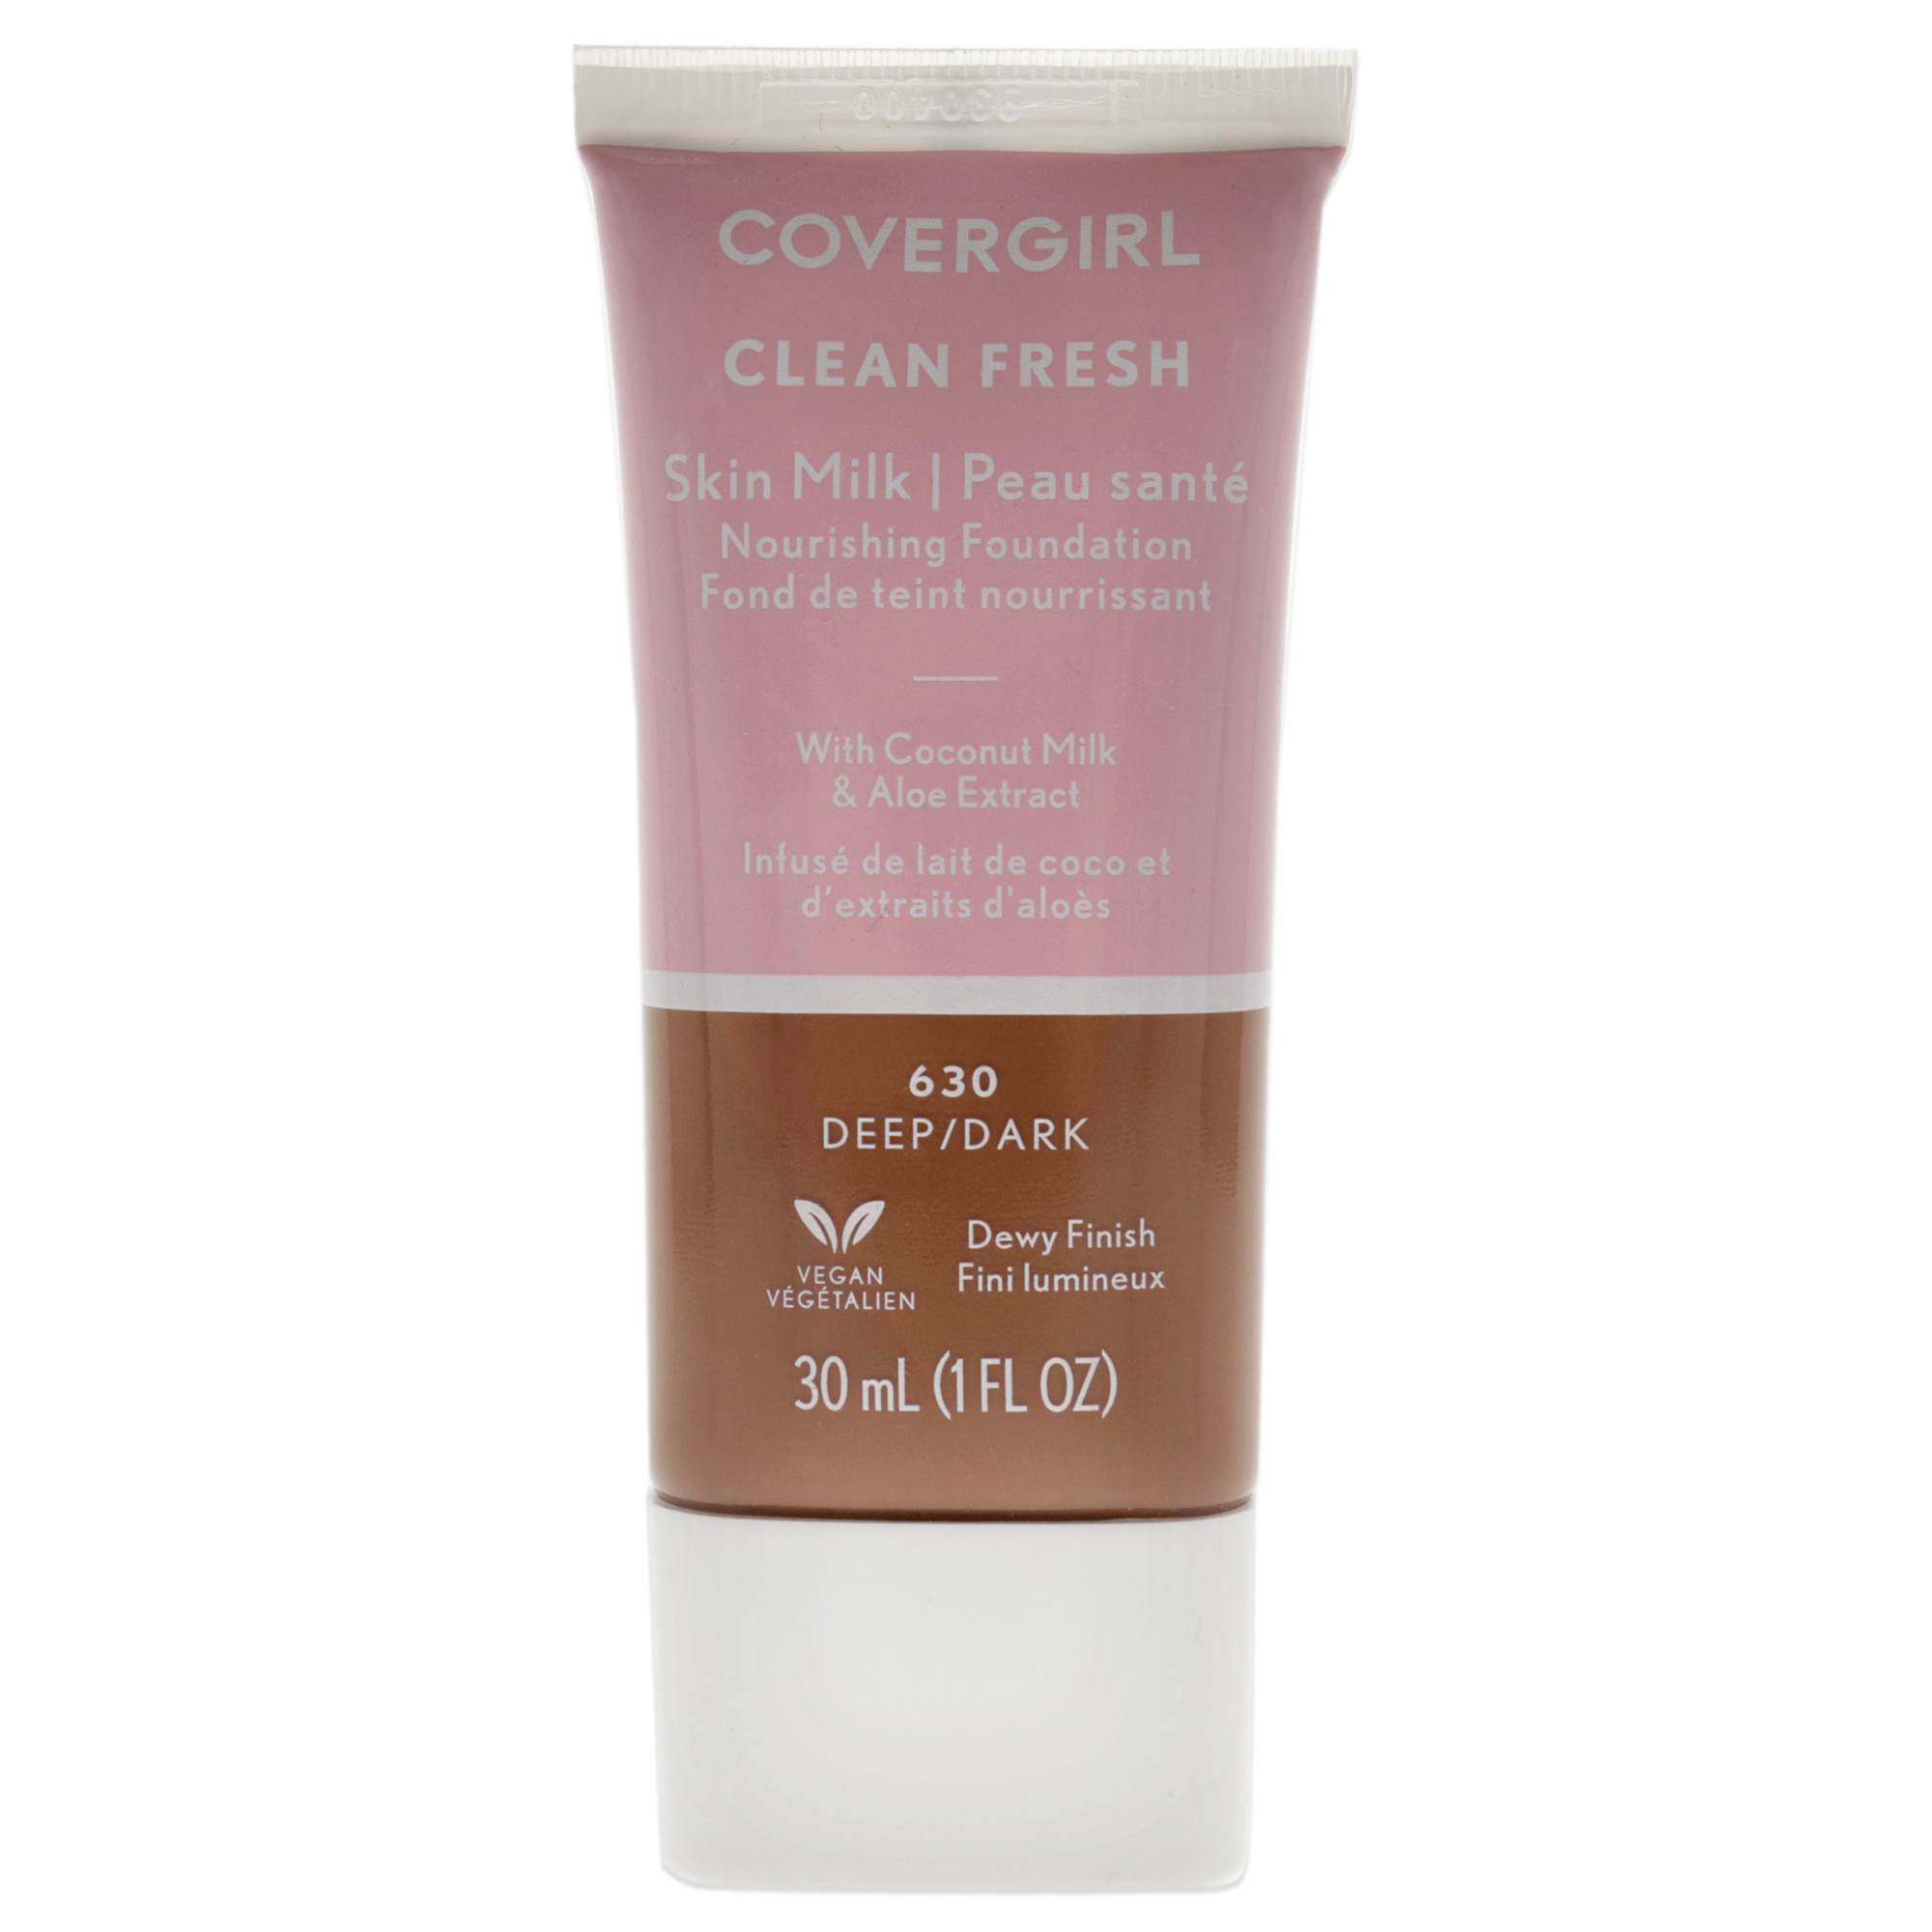 CoverGirl clean Fresh Skin Milk Foundation - 630 Deep Dark by covergirl for Women - 1 oz Foundation(D0102H2LAZW)